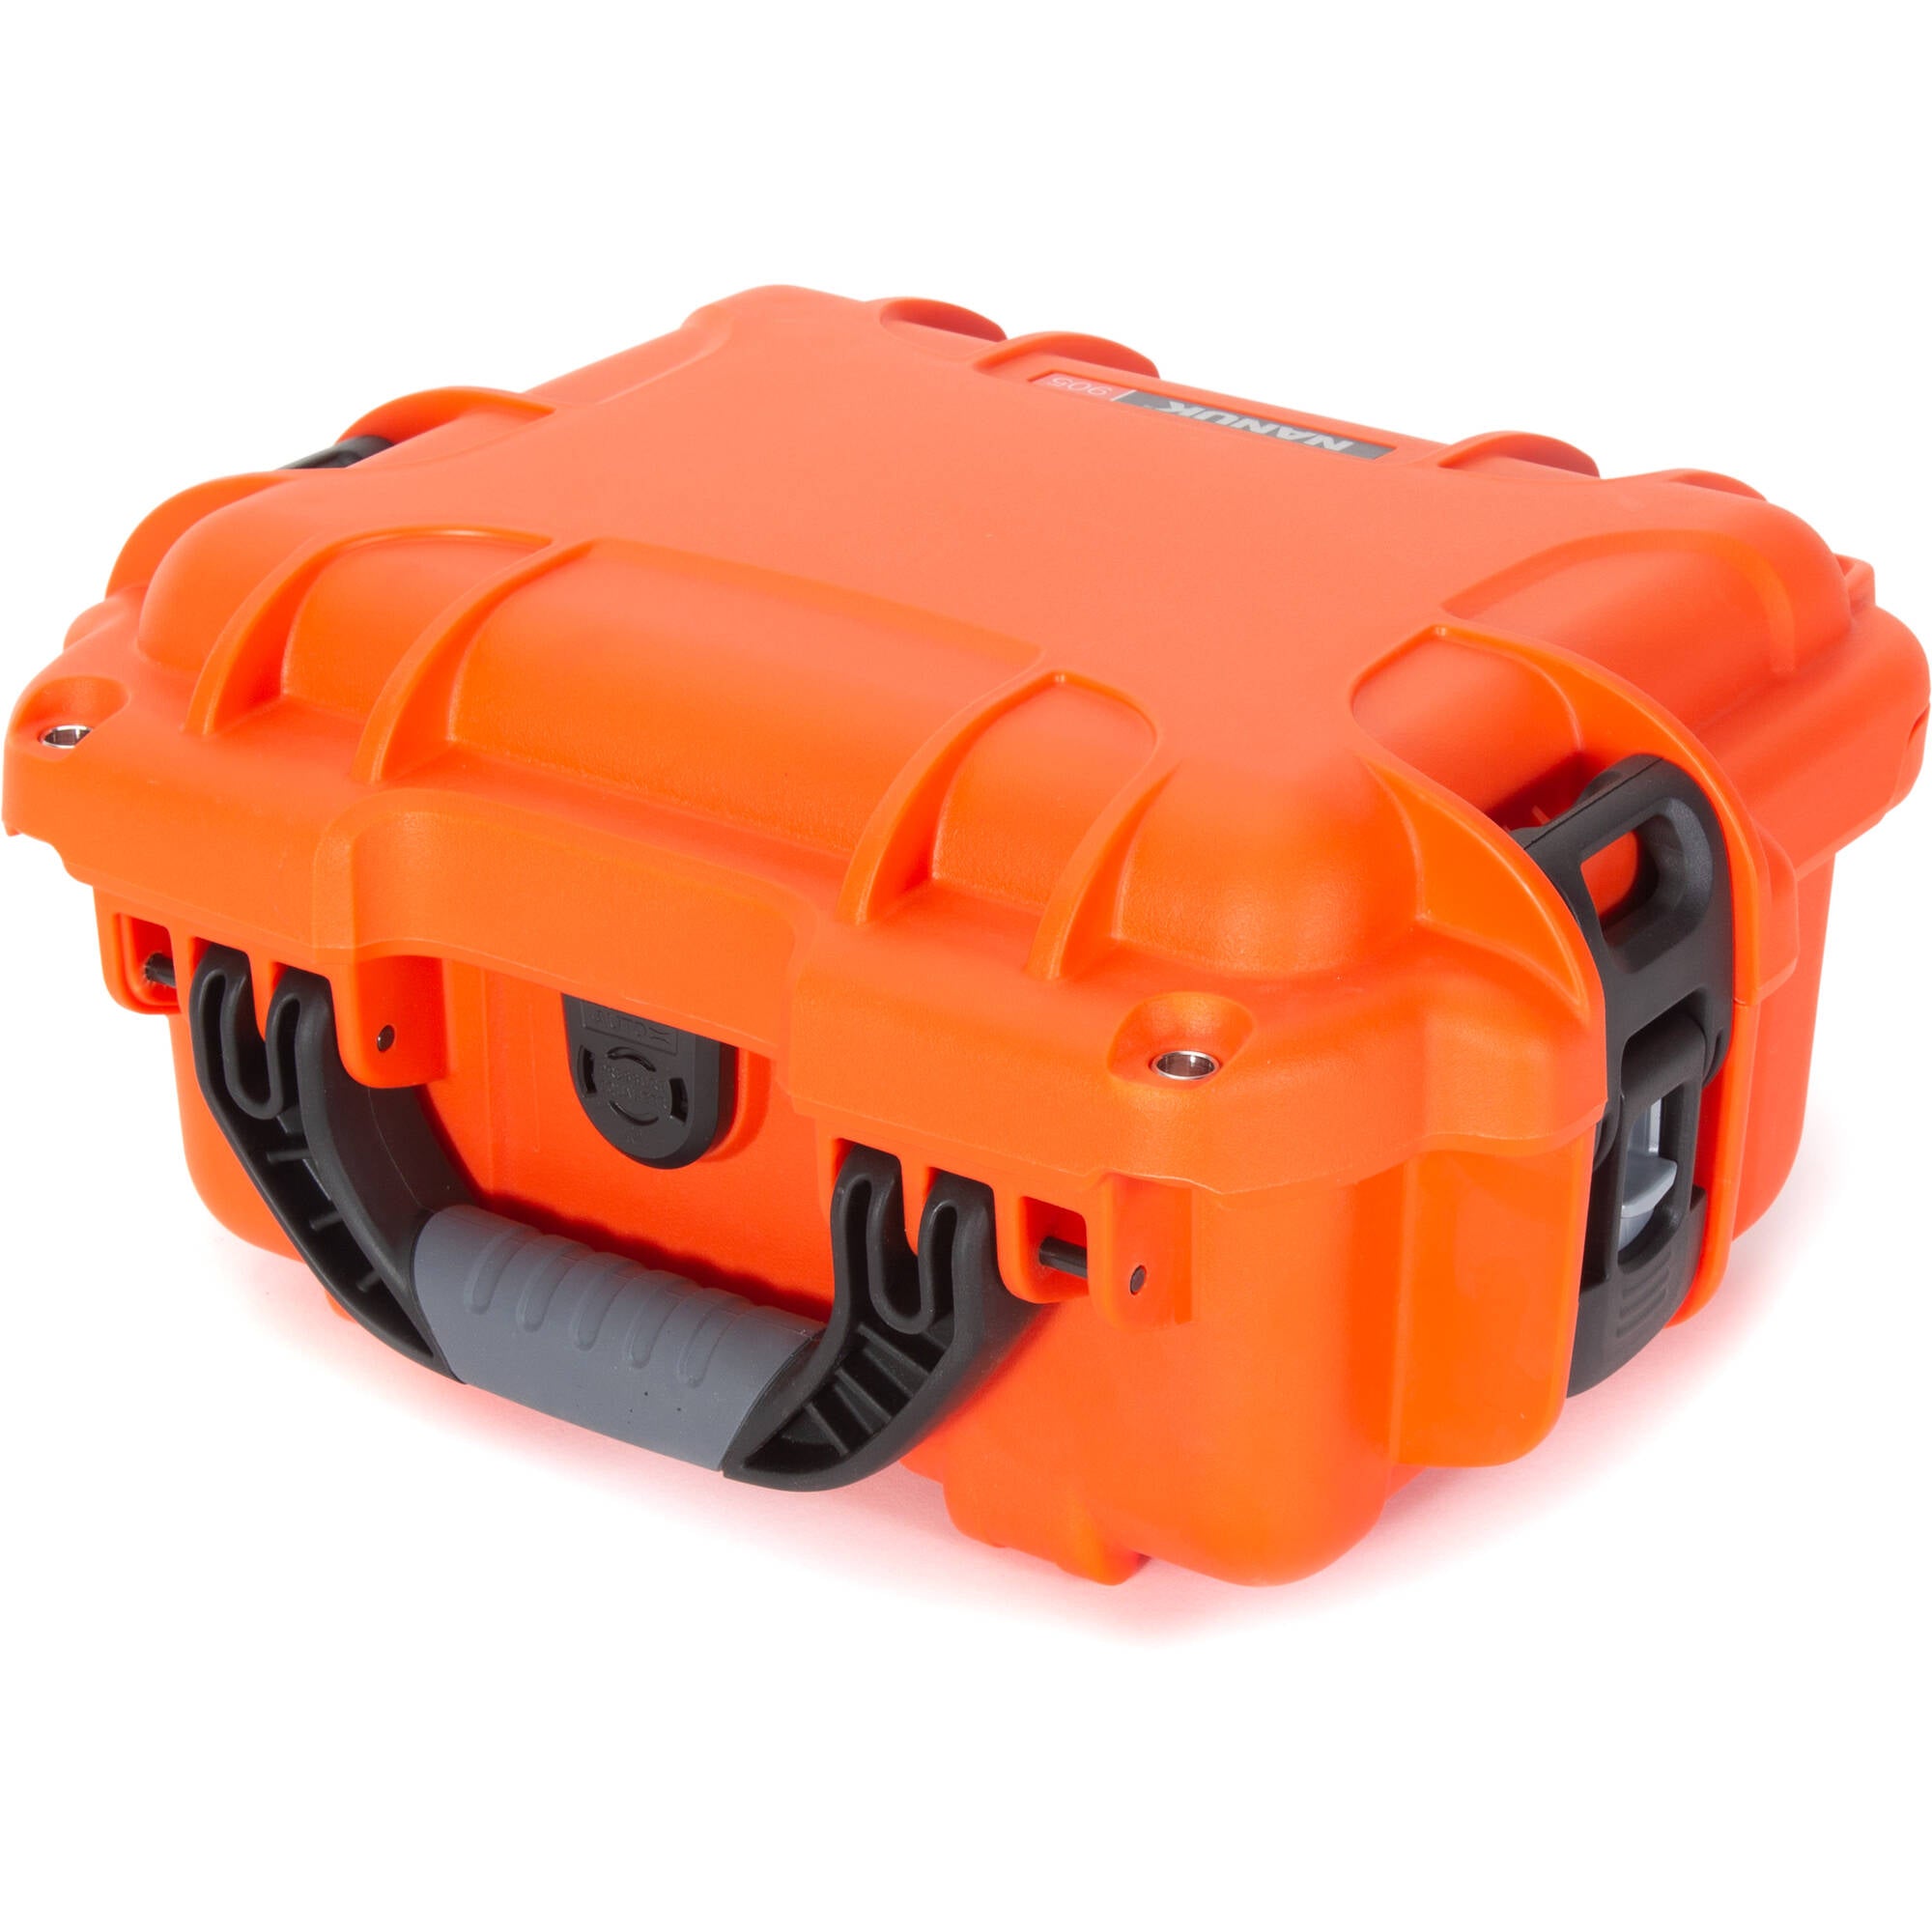 Nanuk 905 Waterproof Hard Case Pro Photo/Video Kit with Padded Dividers and Lid Organizer (Orange)